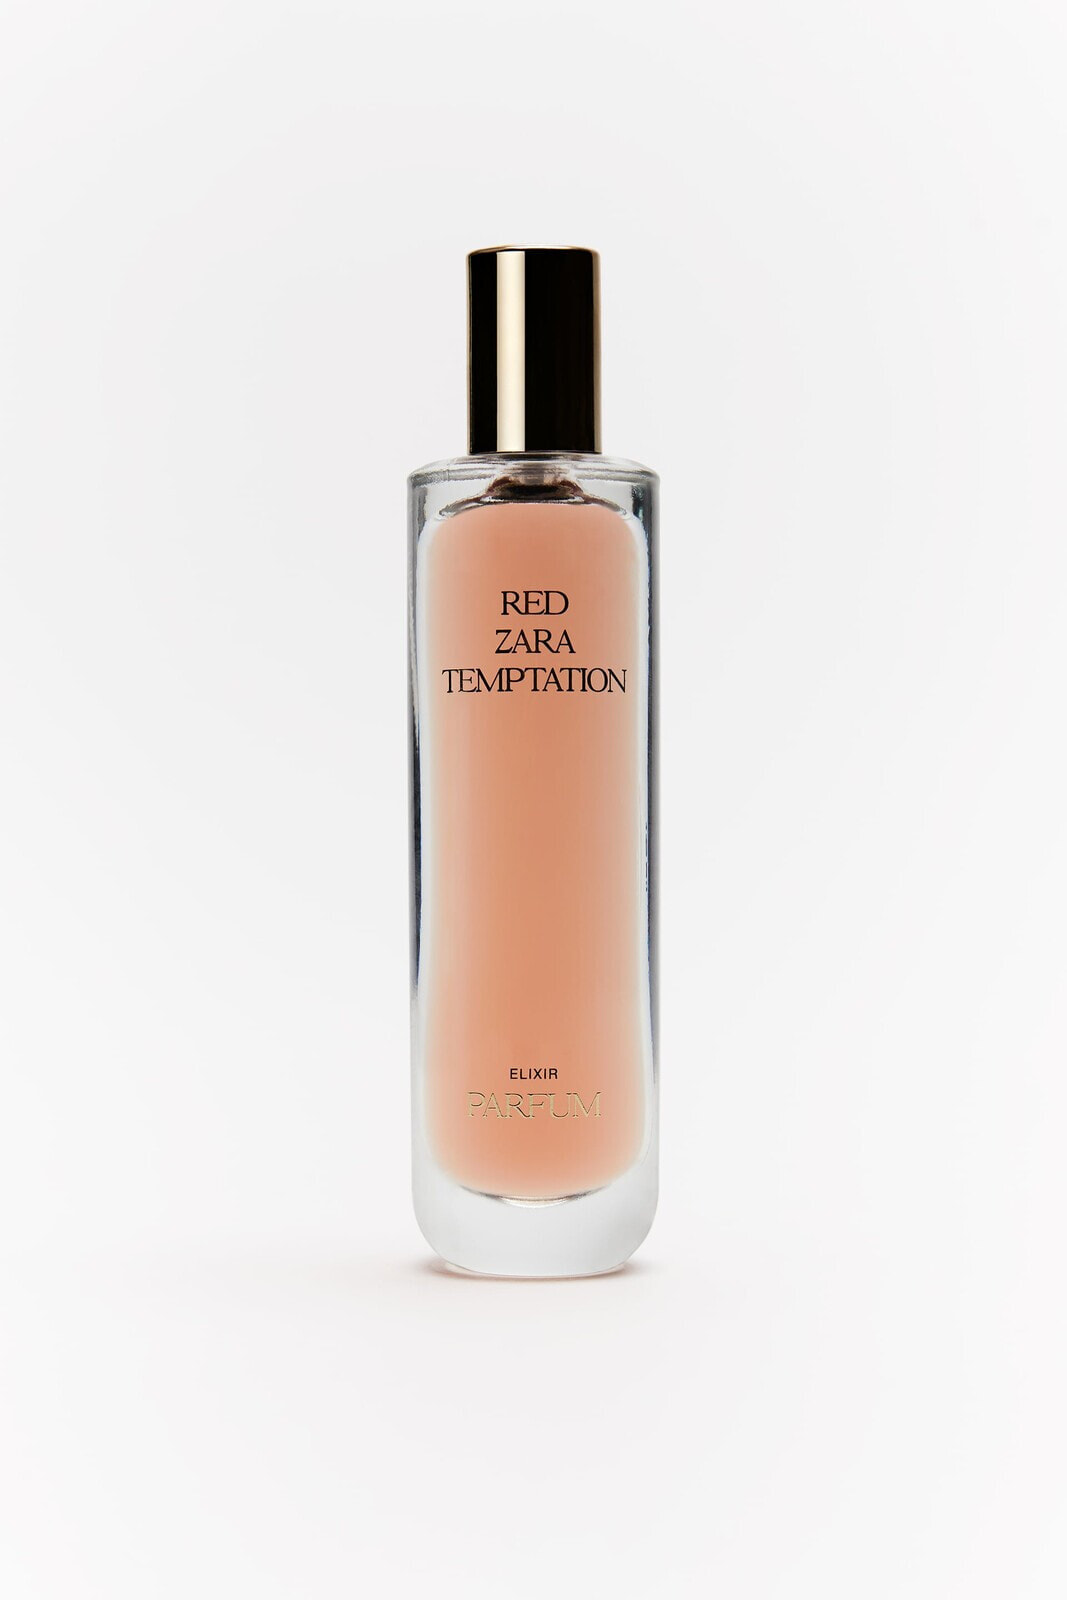 Red zara temptation elixir parfum 50 ml / 1.69 oz